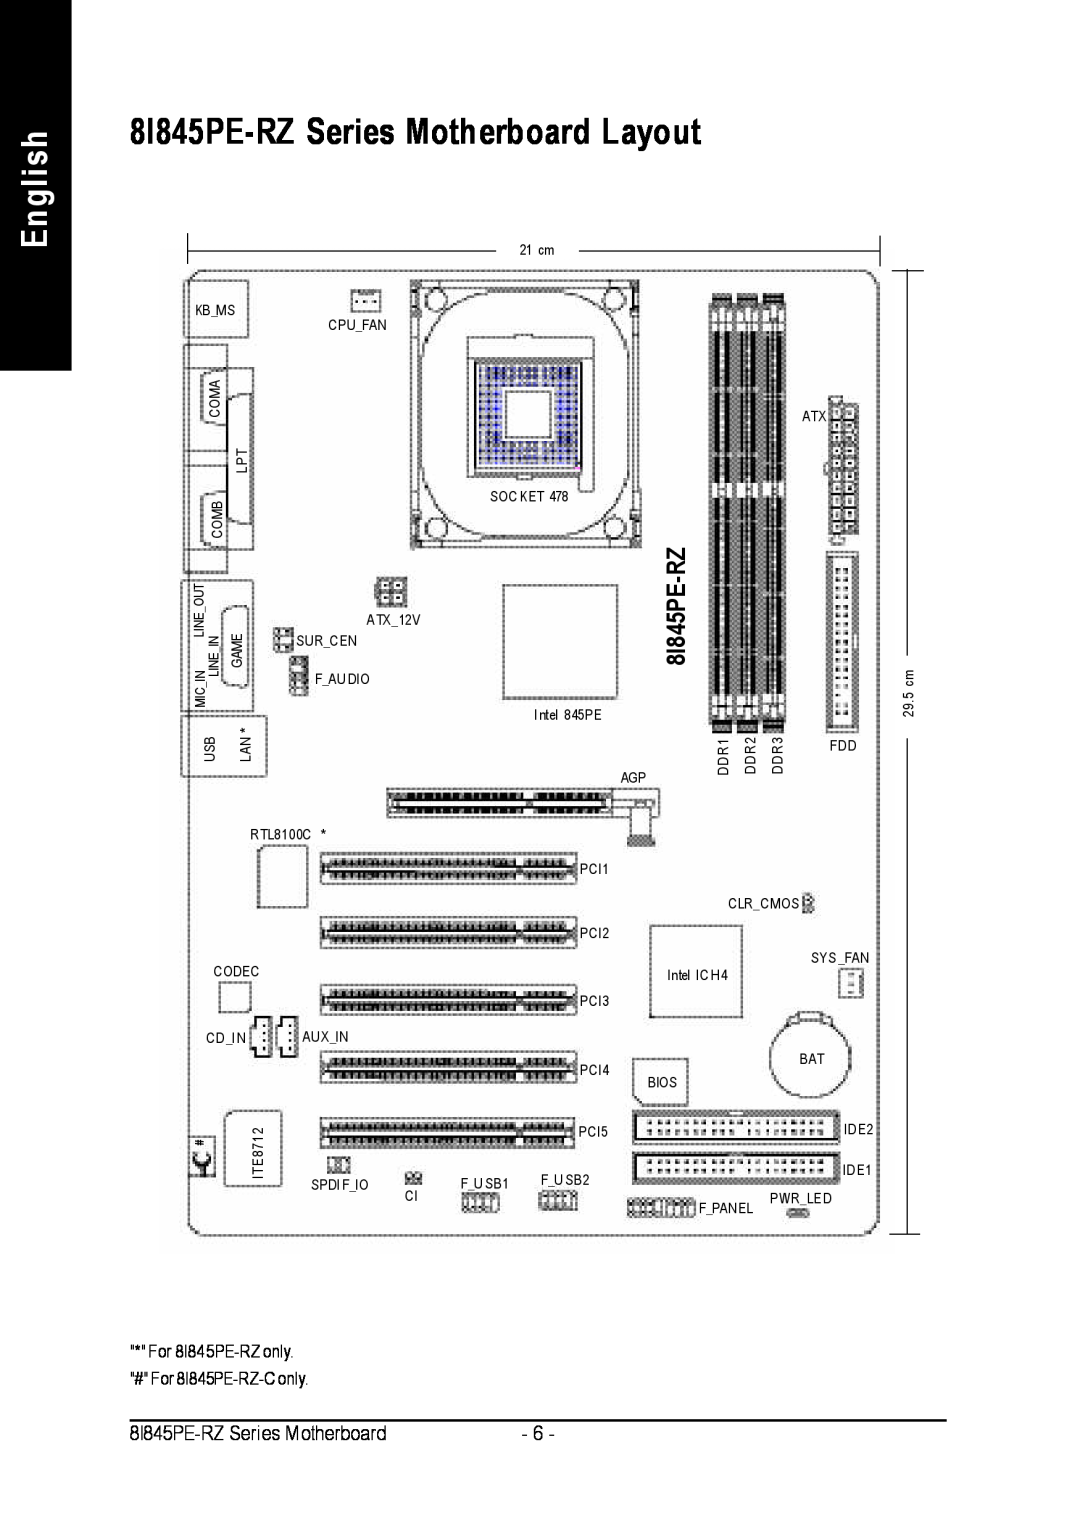 Intel 8I845PE-RZ-C user manual 8I845PE-RZ Series Motherboard Layout, English, ITE8712 